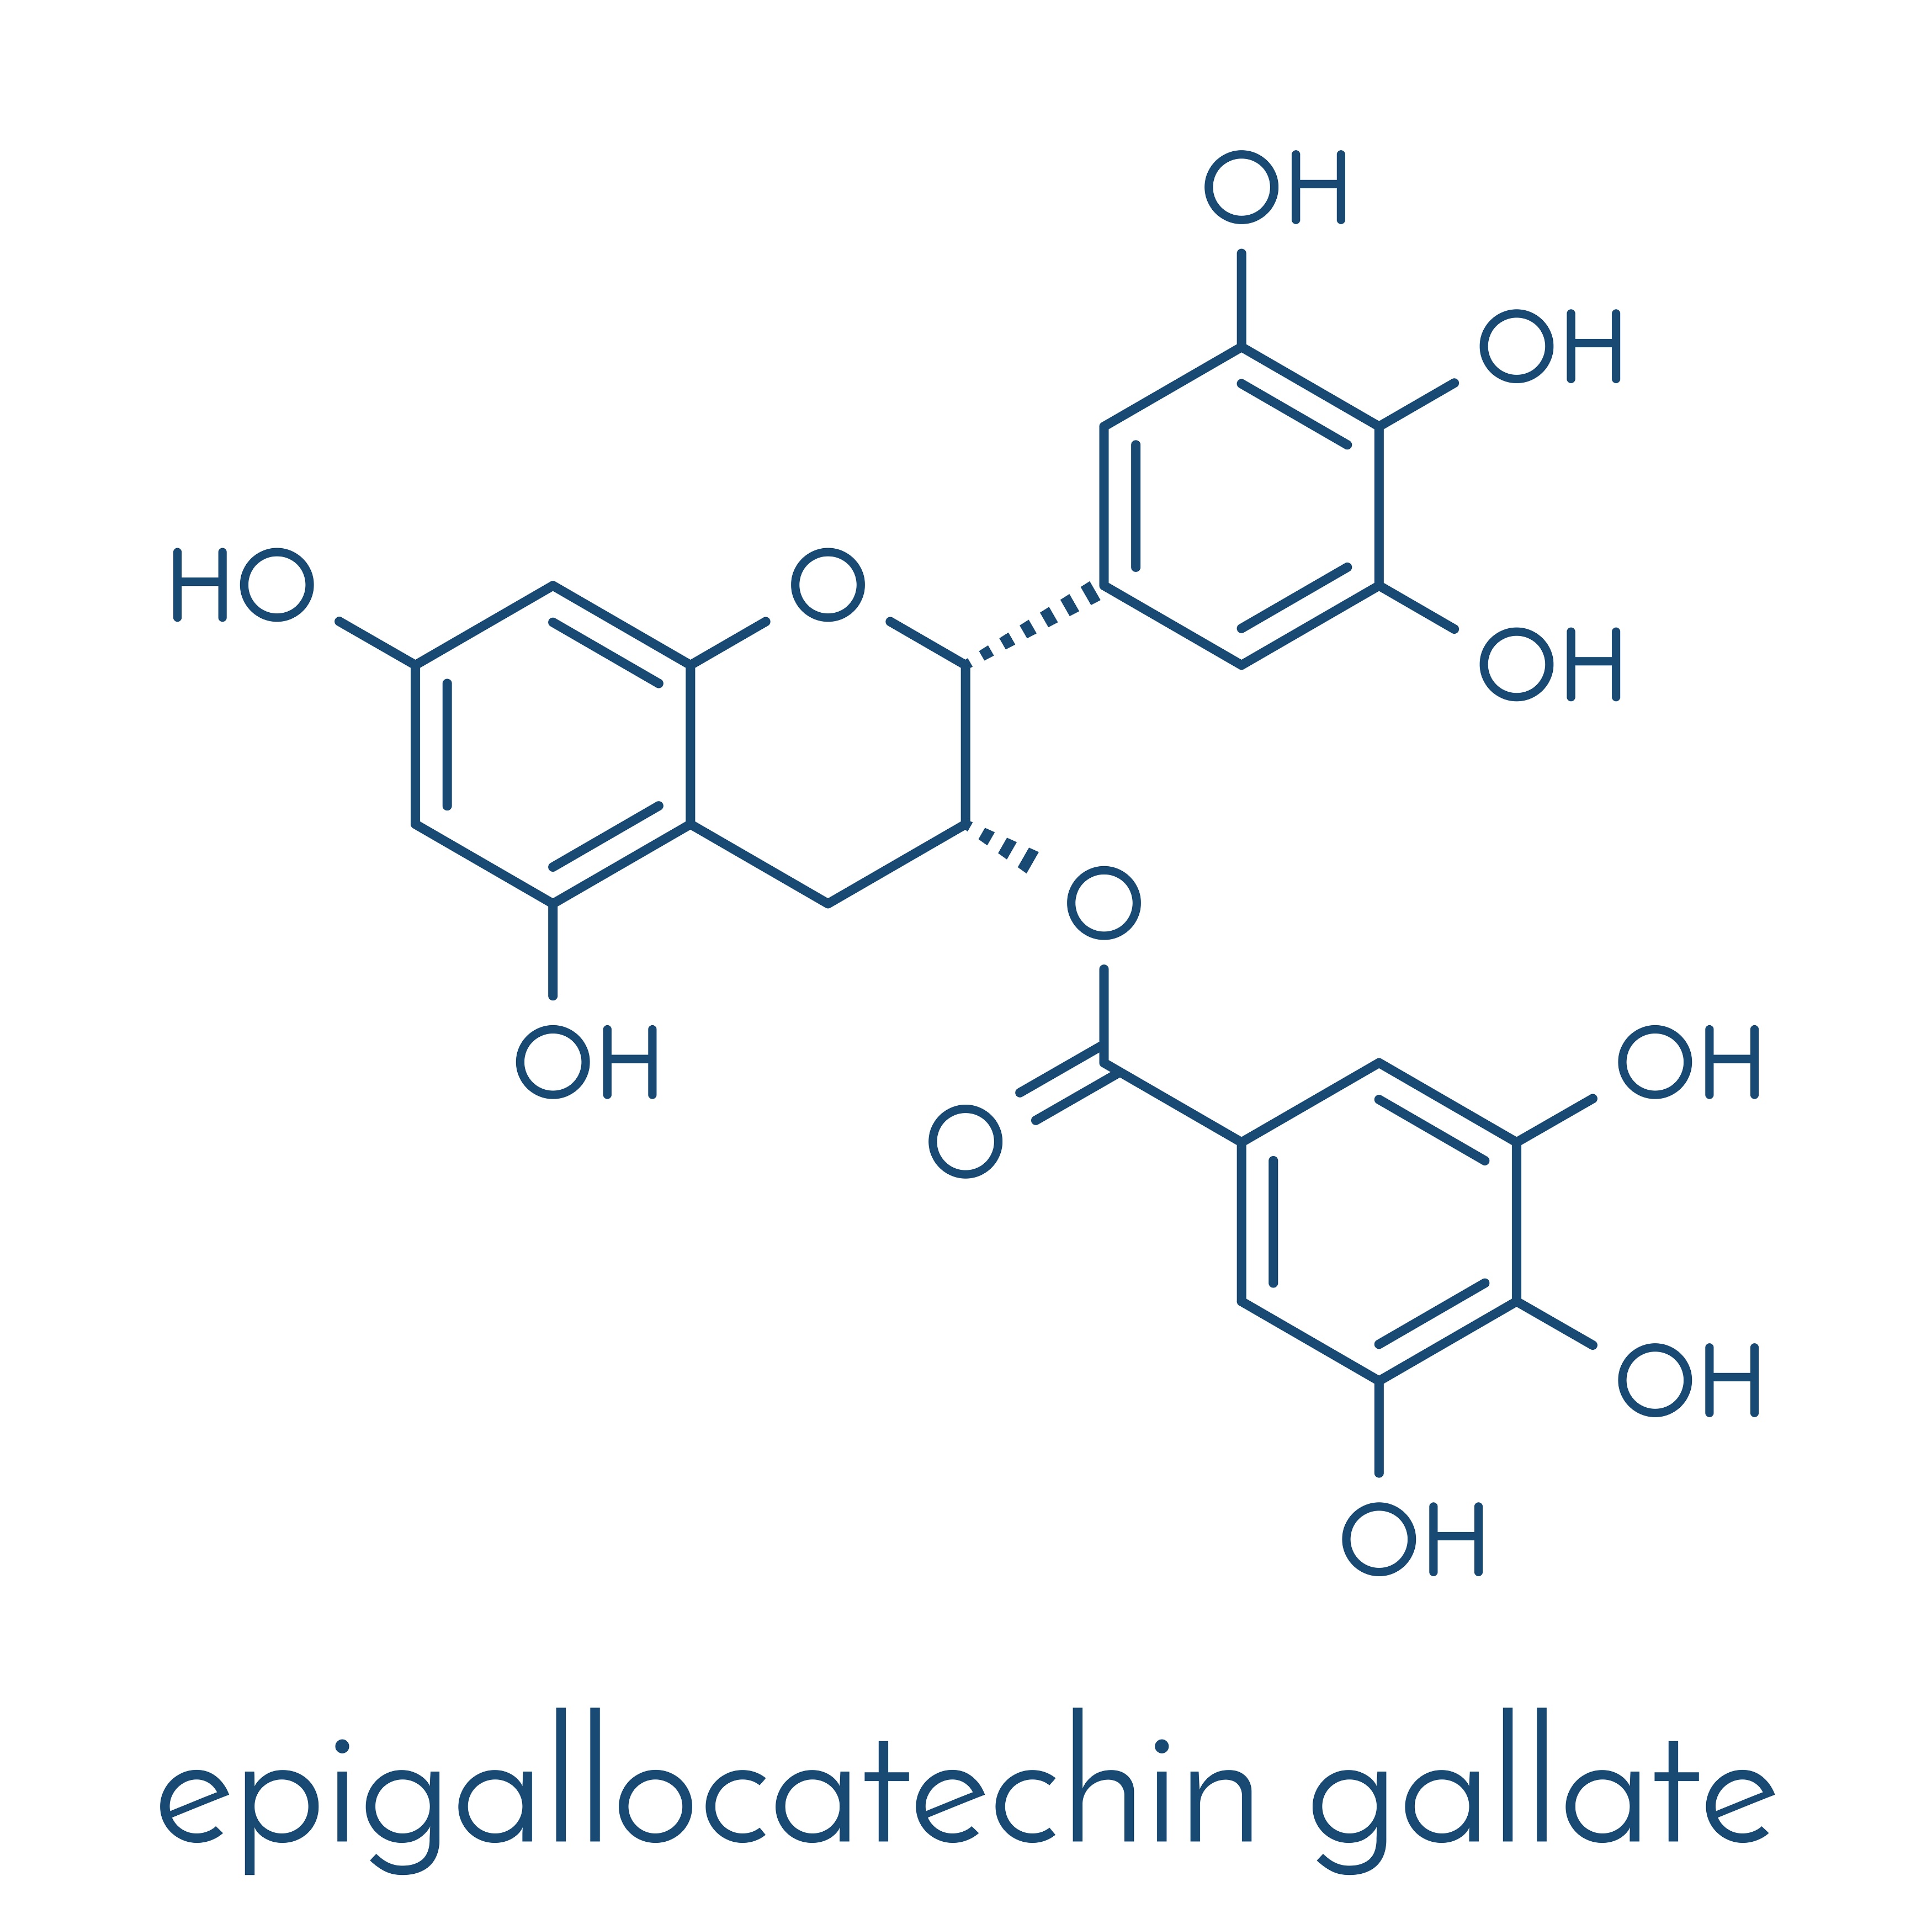 EGCG (epigallocatechin gallate) chemical formula